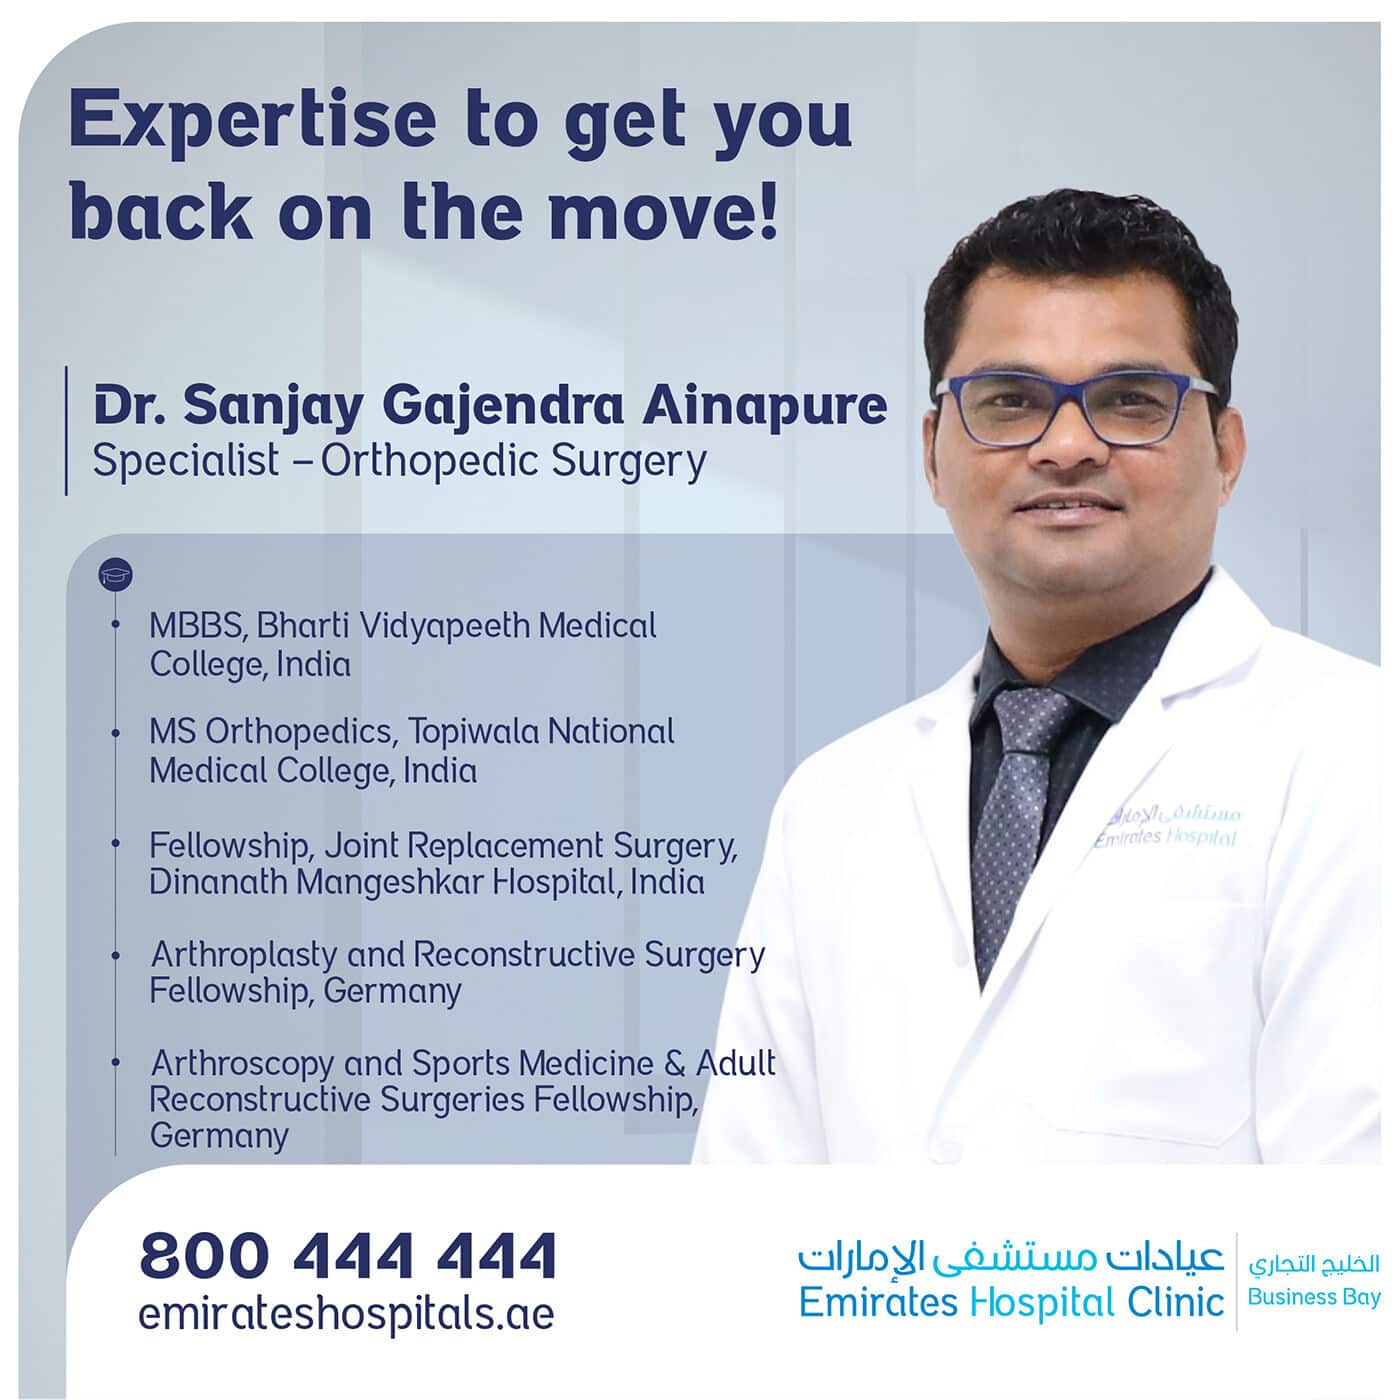 Dr. Sanjay Gajendra Ainapure, Specialist – Orthopedic Surgery, Emirates Hospital Clinic, Business Bay